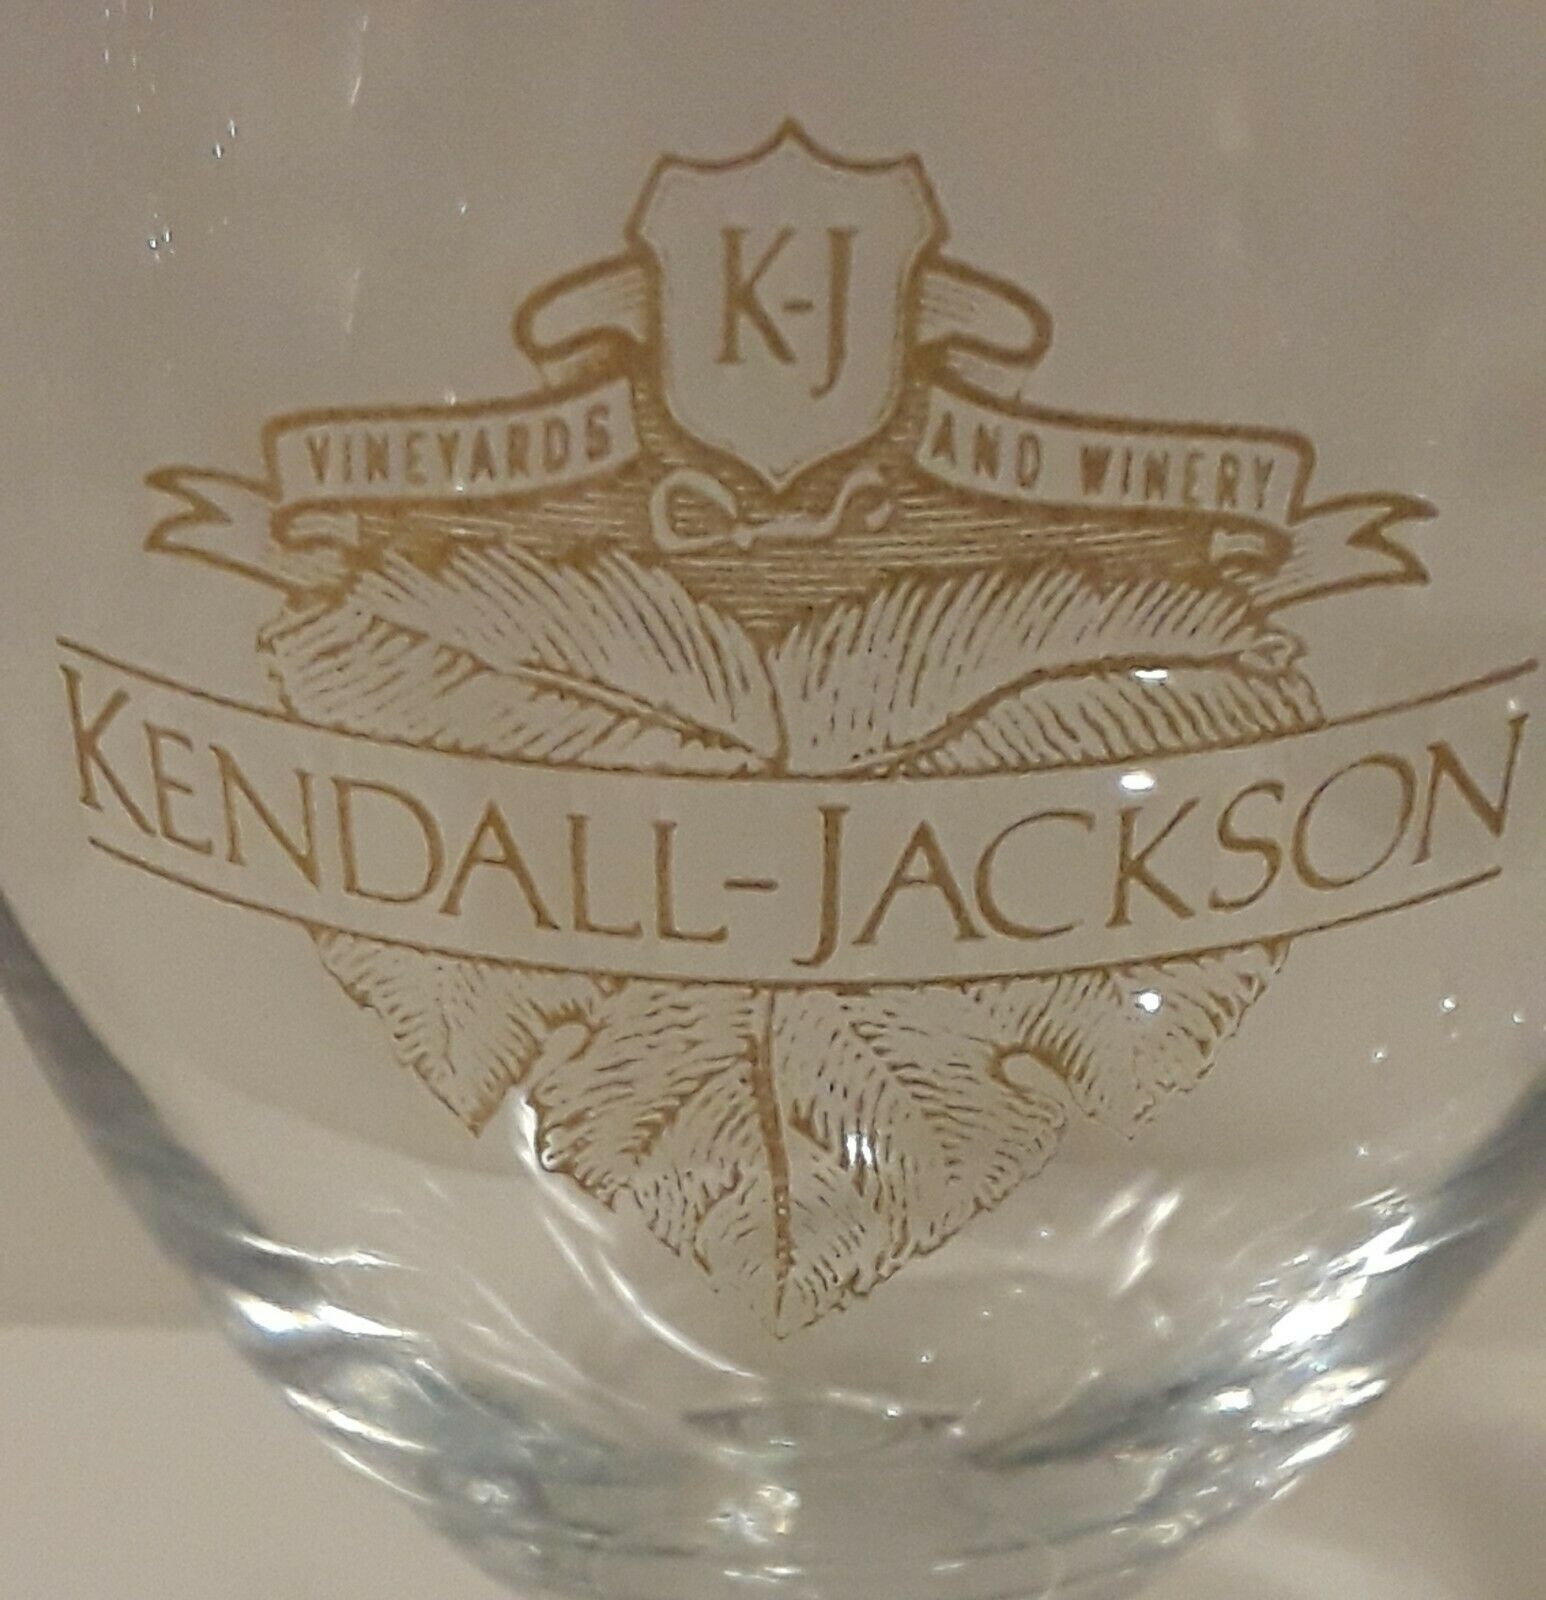 Kendall Jackson Winery Santa Rosa California Wine Glass Gold Artwork 6-3/4" Gift